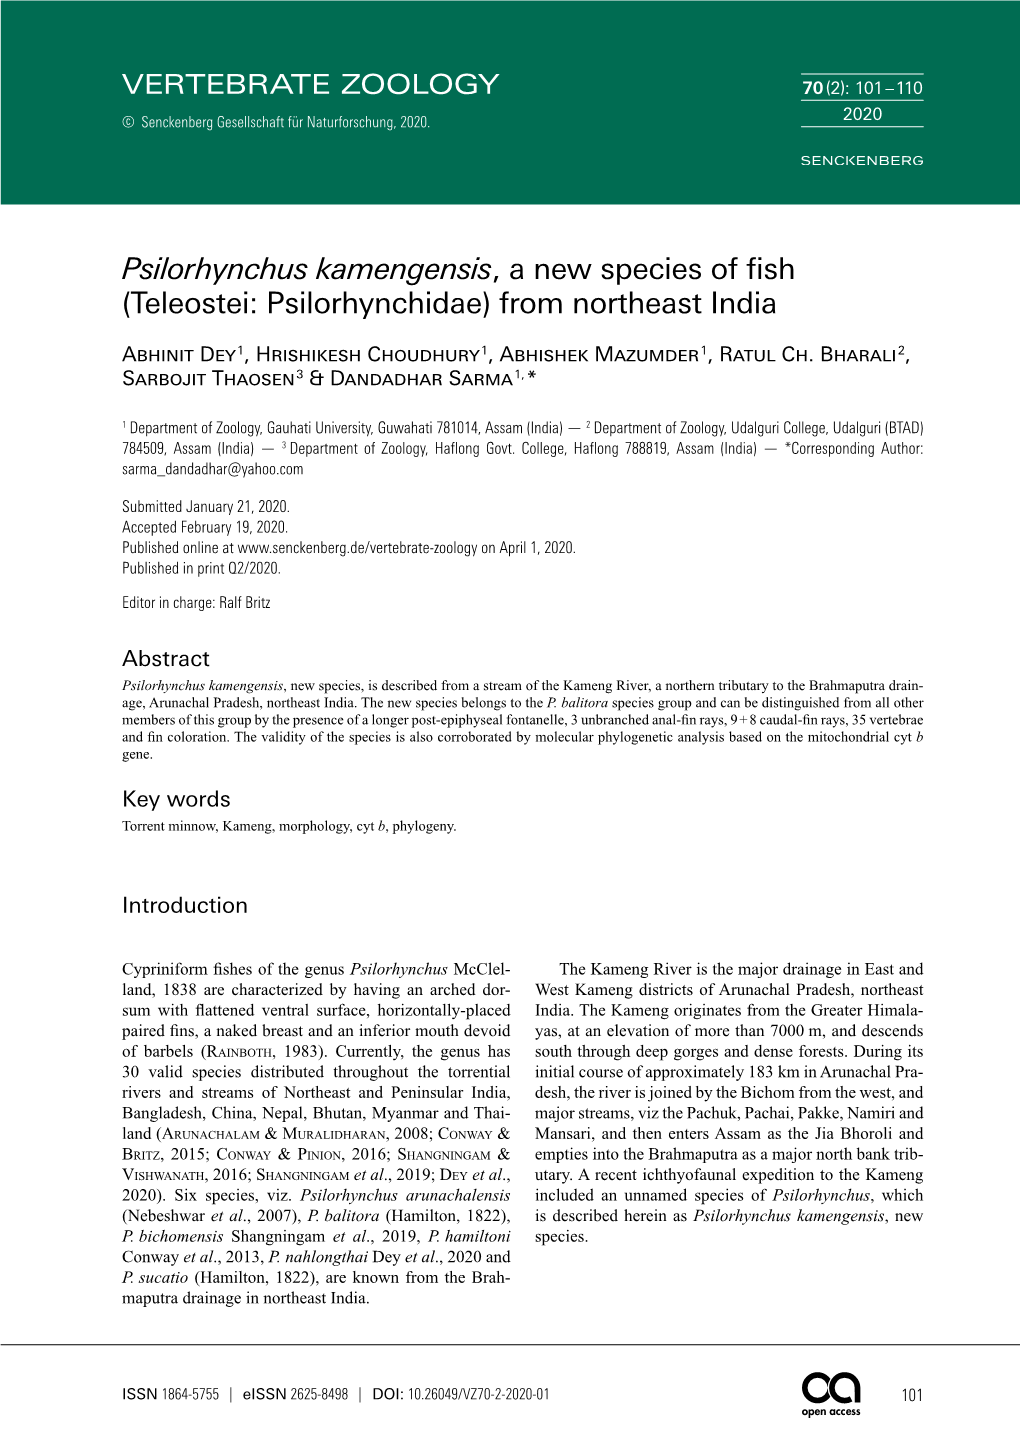 Psilorhynchus Kamengensis, a New Species of Fish (Teleostei: Psilorhynchidae) from Northeast India